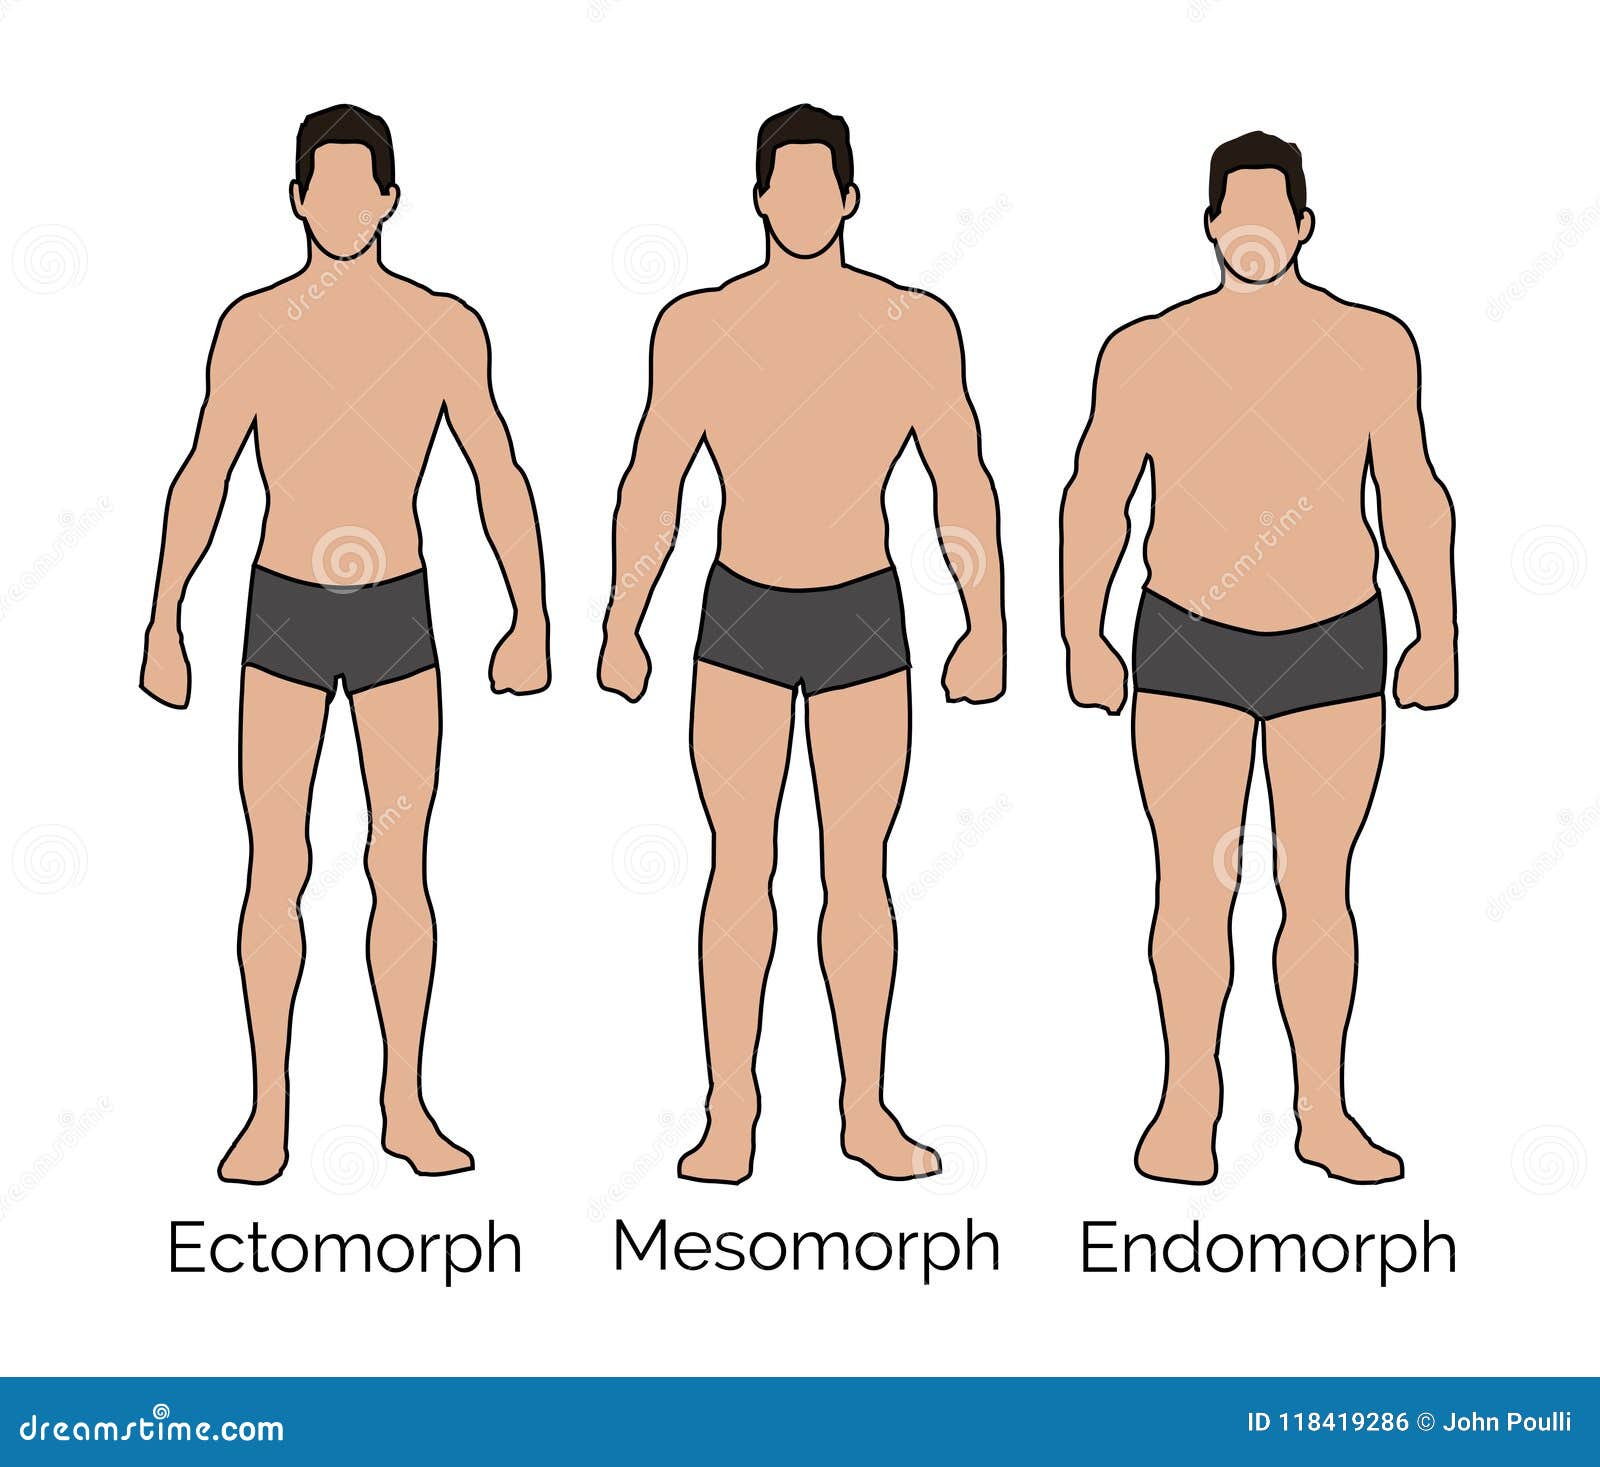 https://thumbs.dreamstime.com/z/ectomorph-mesomorph-endomorph-male-small-medium-large-body-frame-illustration-showing-difference-sizes-118419286.jpg